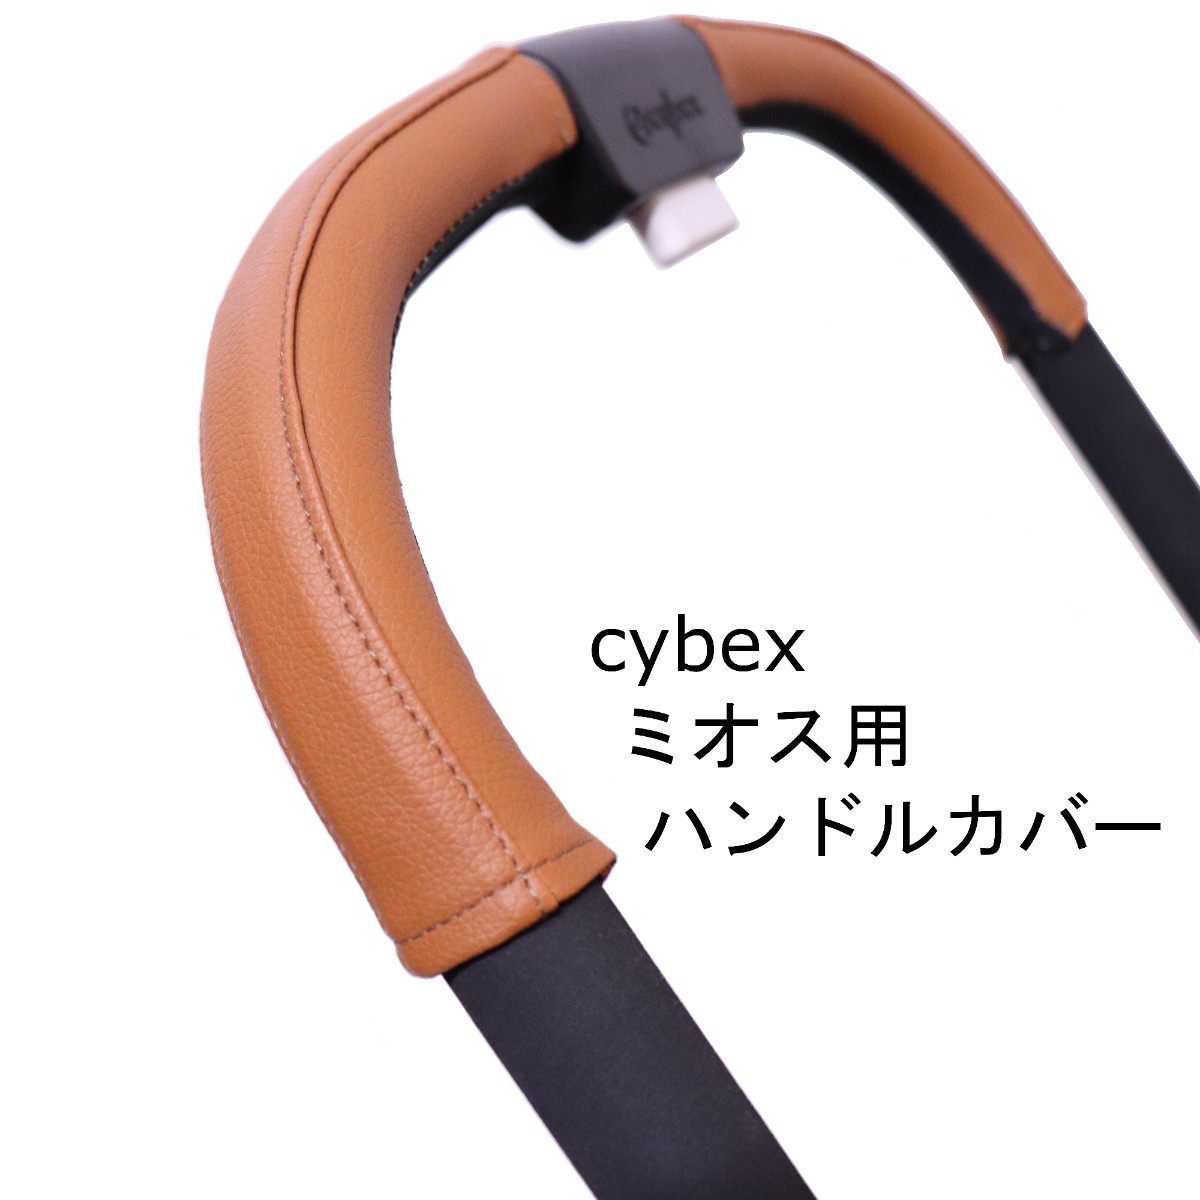 8 cybex サイベックス ミオス用ハンドルカバー